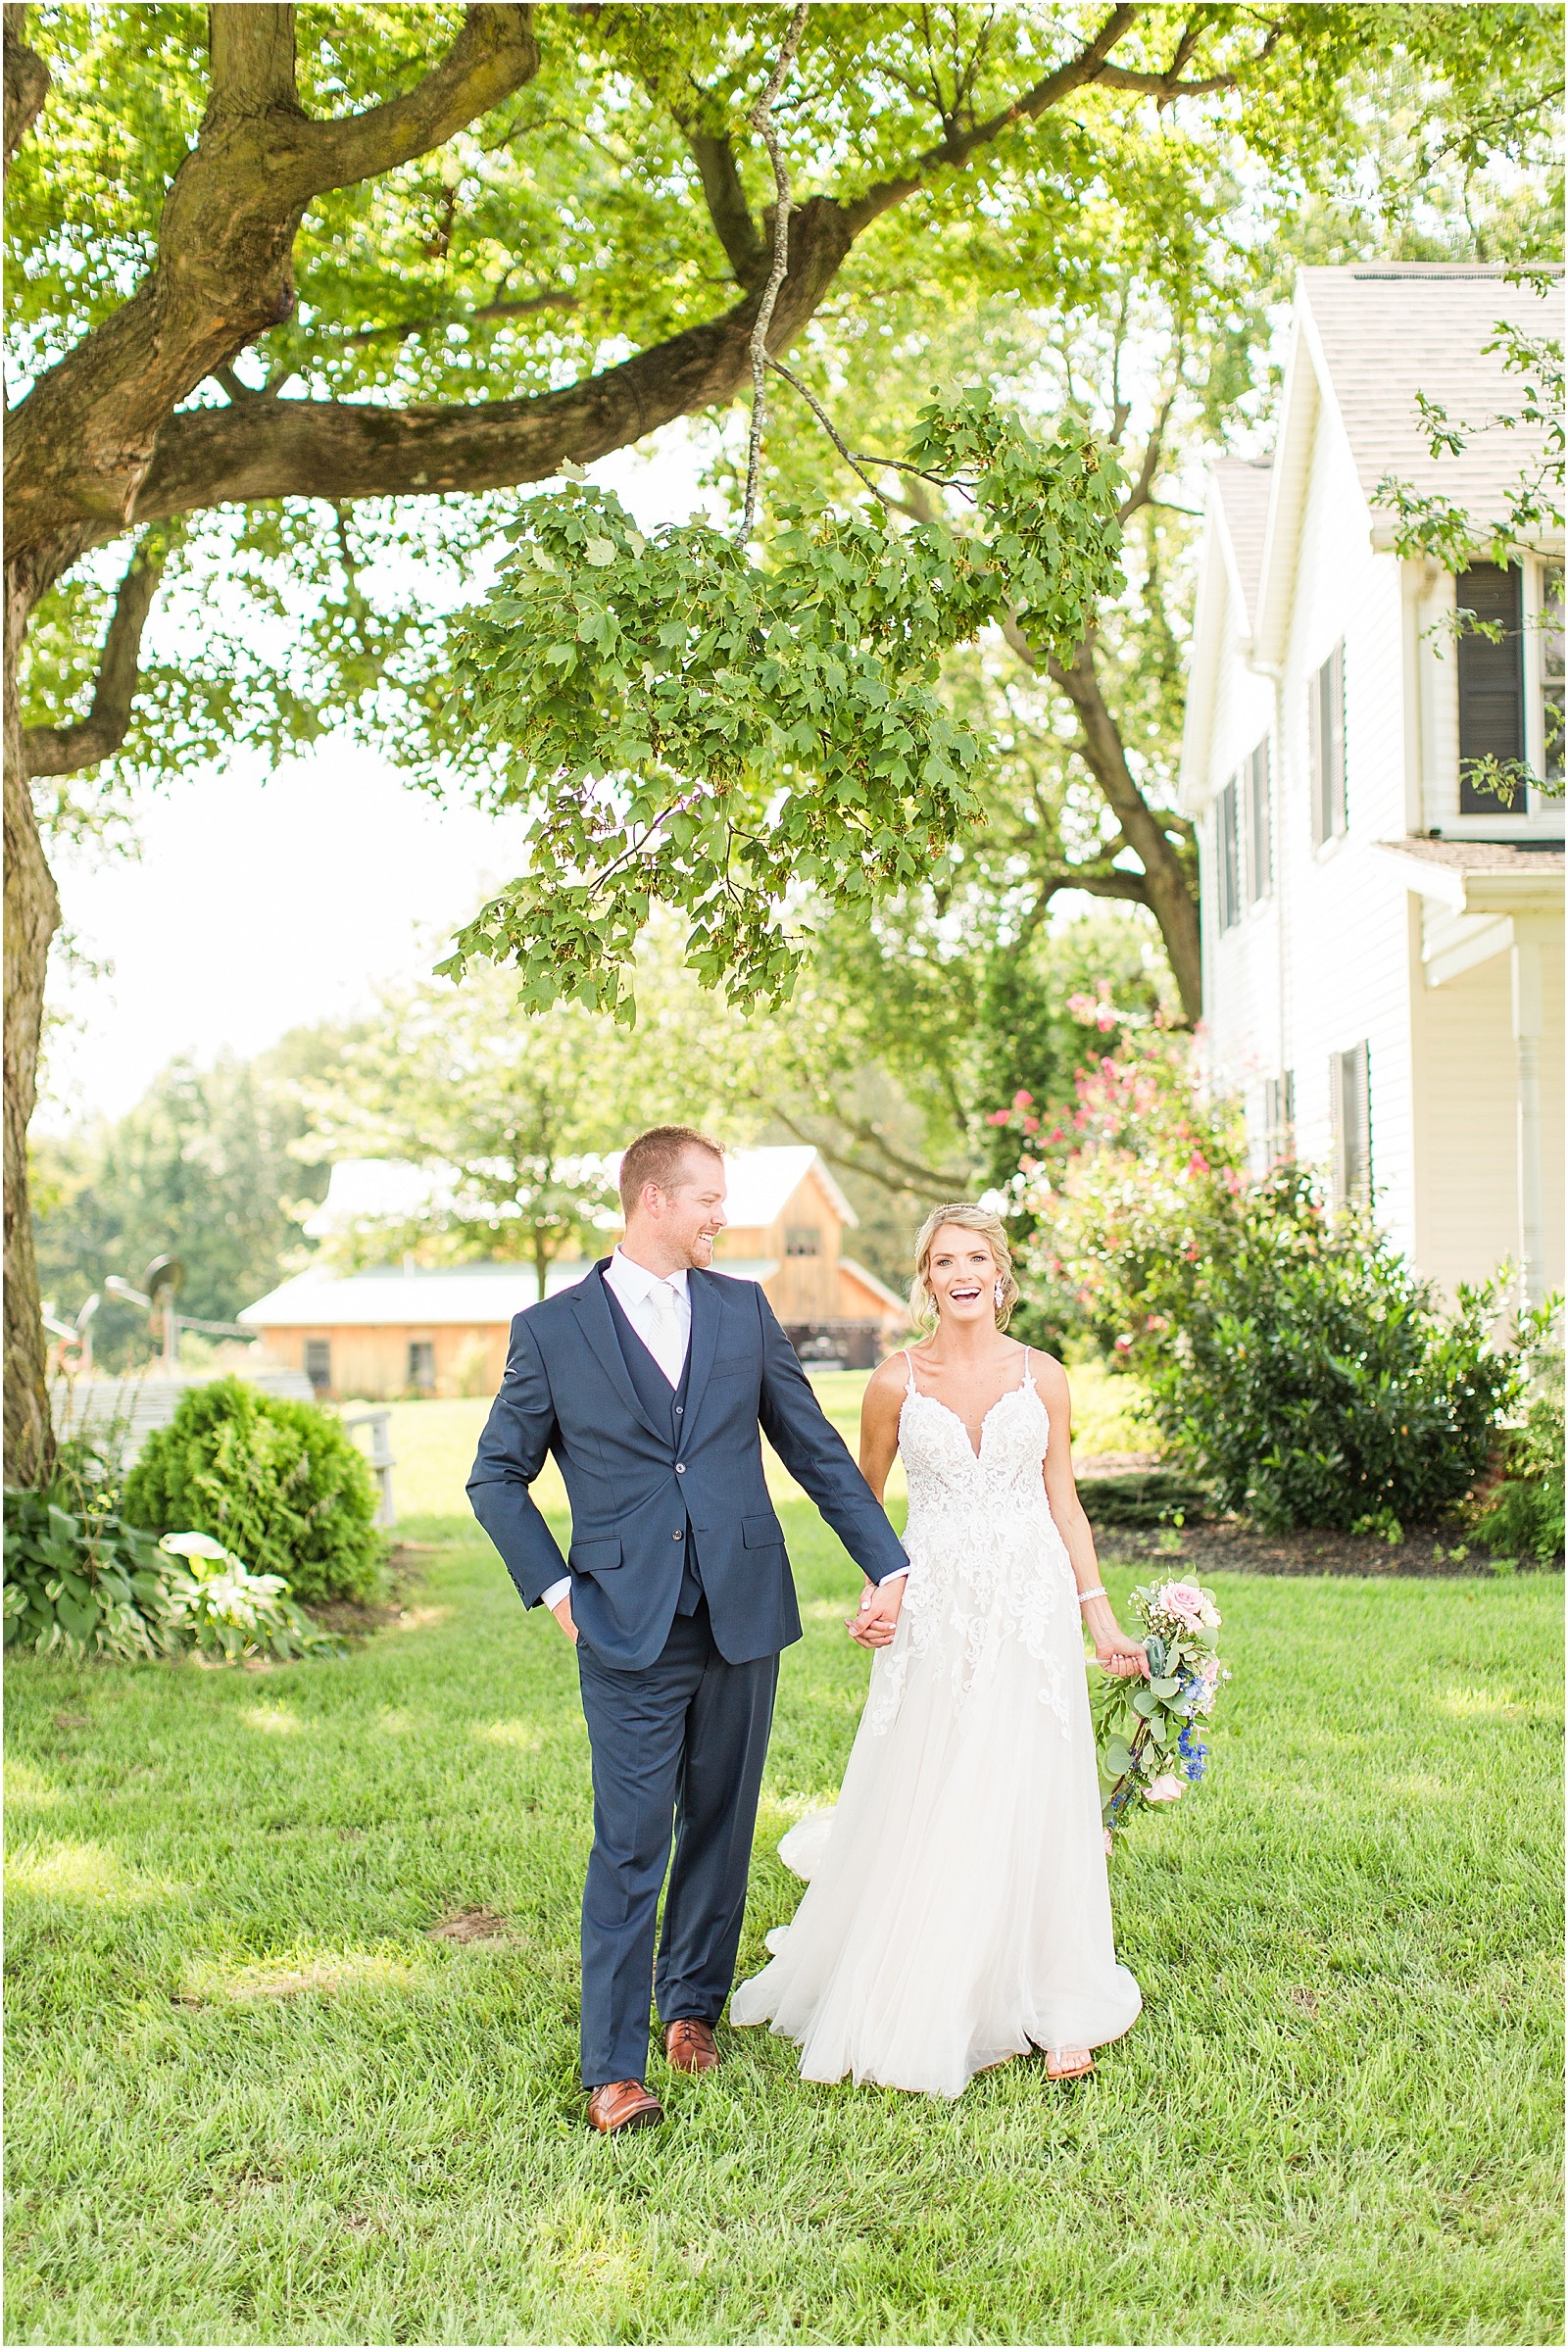 Corner House B&B Wedding | Rockport, IN | Dana and Blake | Bret and Brandie Photography 093.jpg